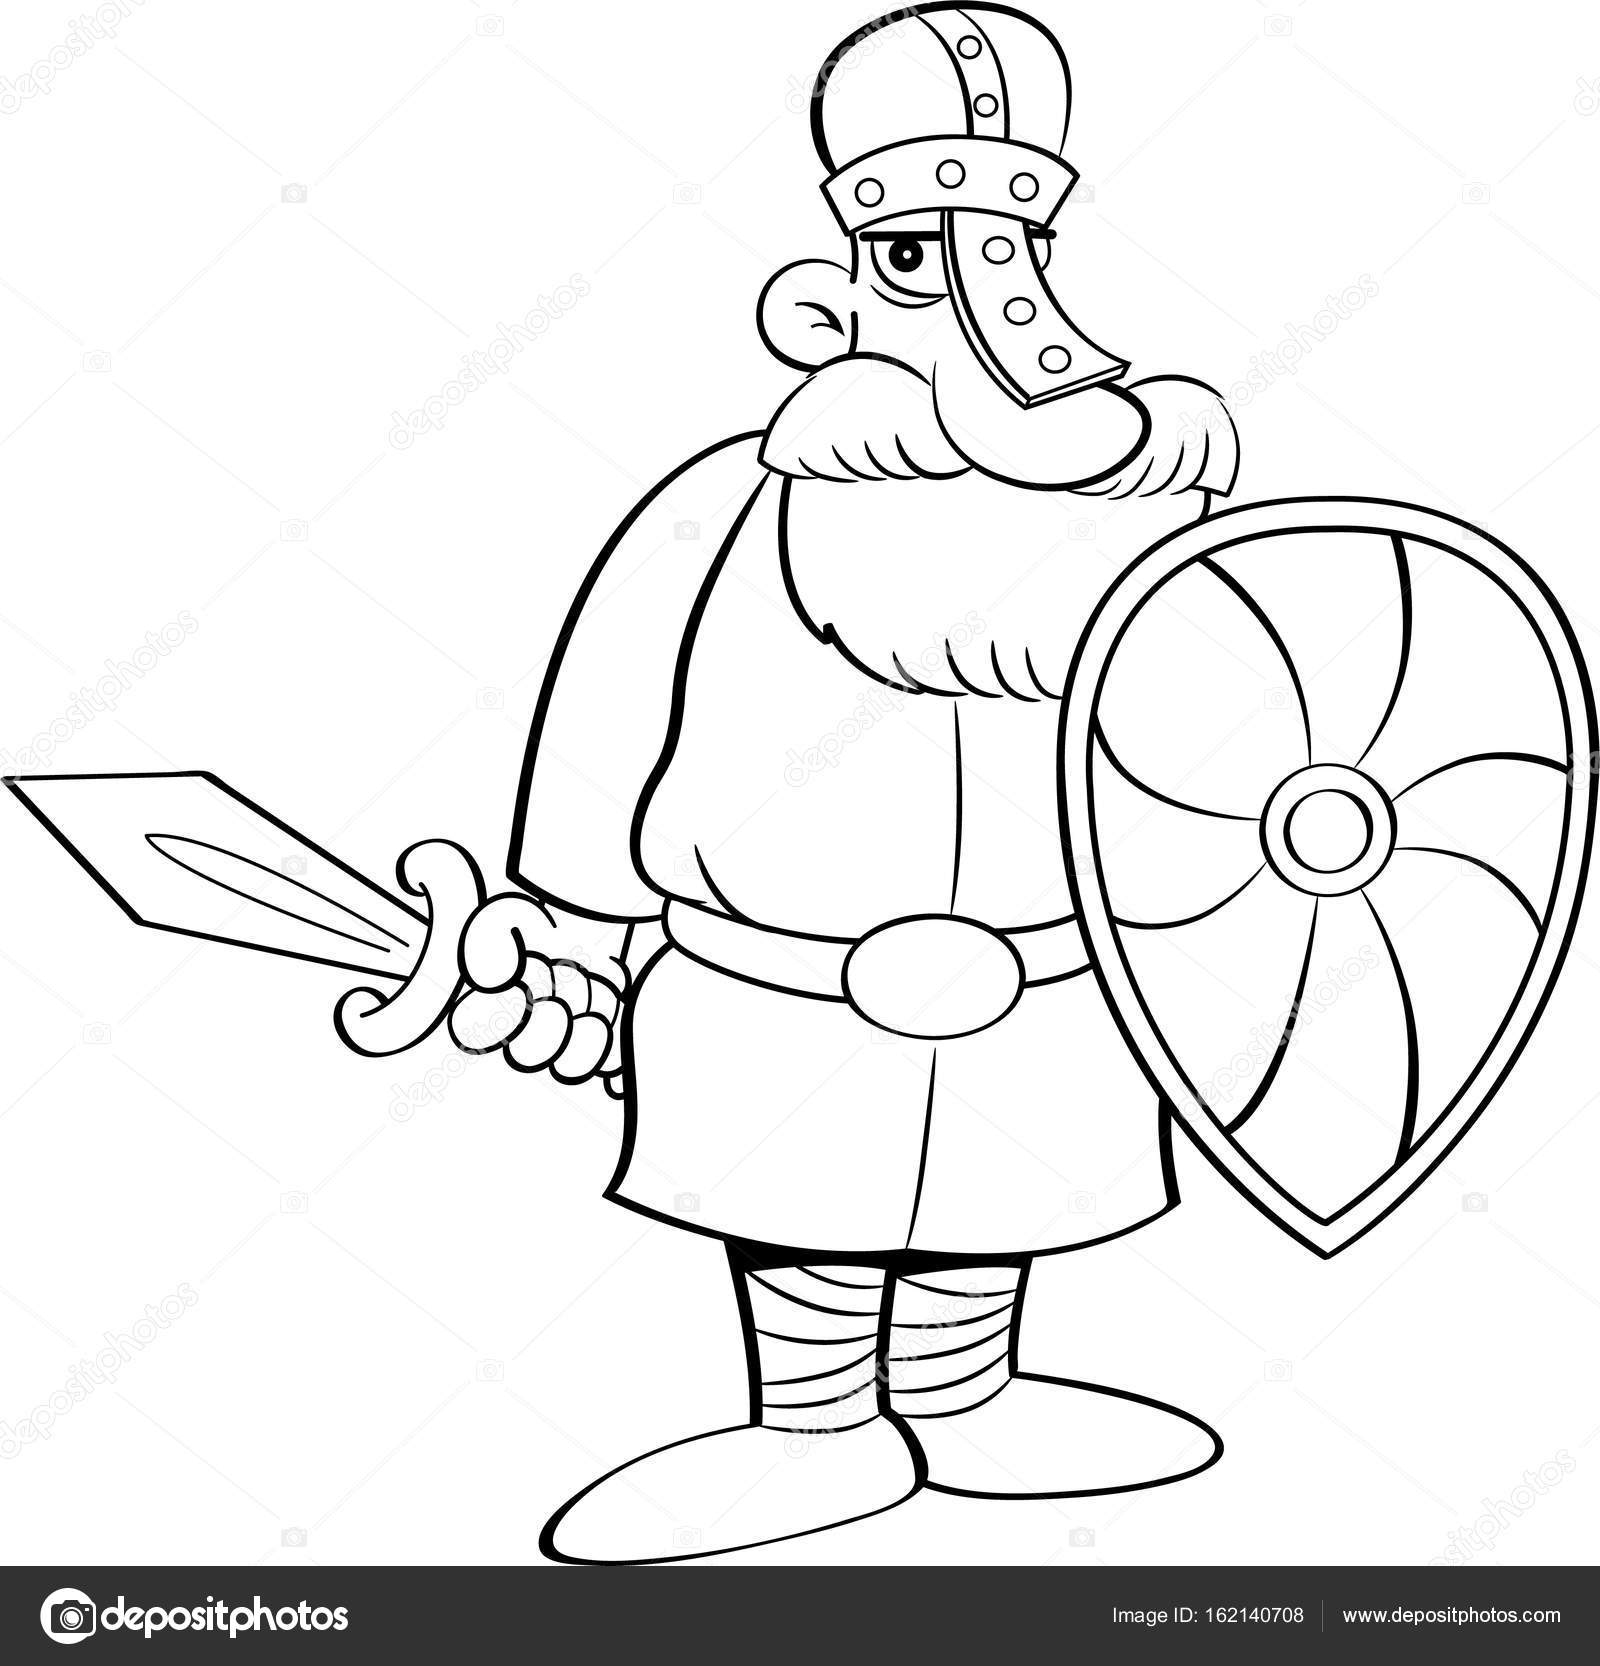 stock illustration cartoon me val knight holding a